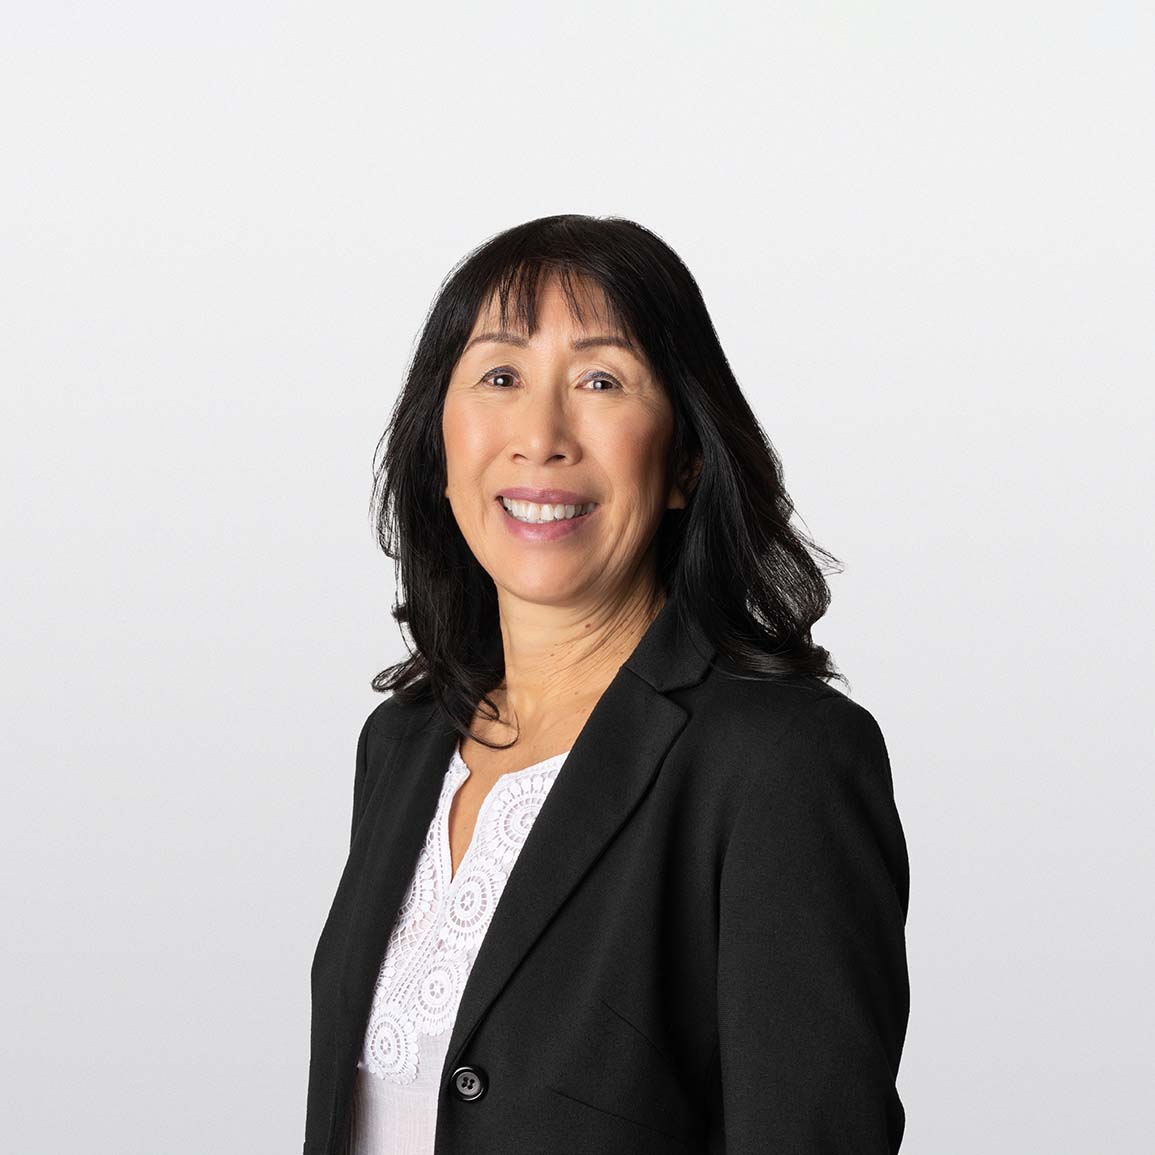 Image of Lucinda Bareham, financial advisor on white background.